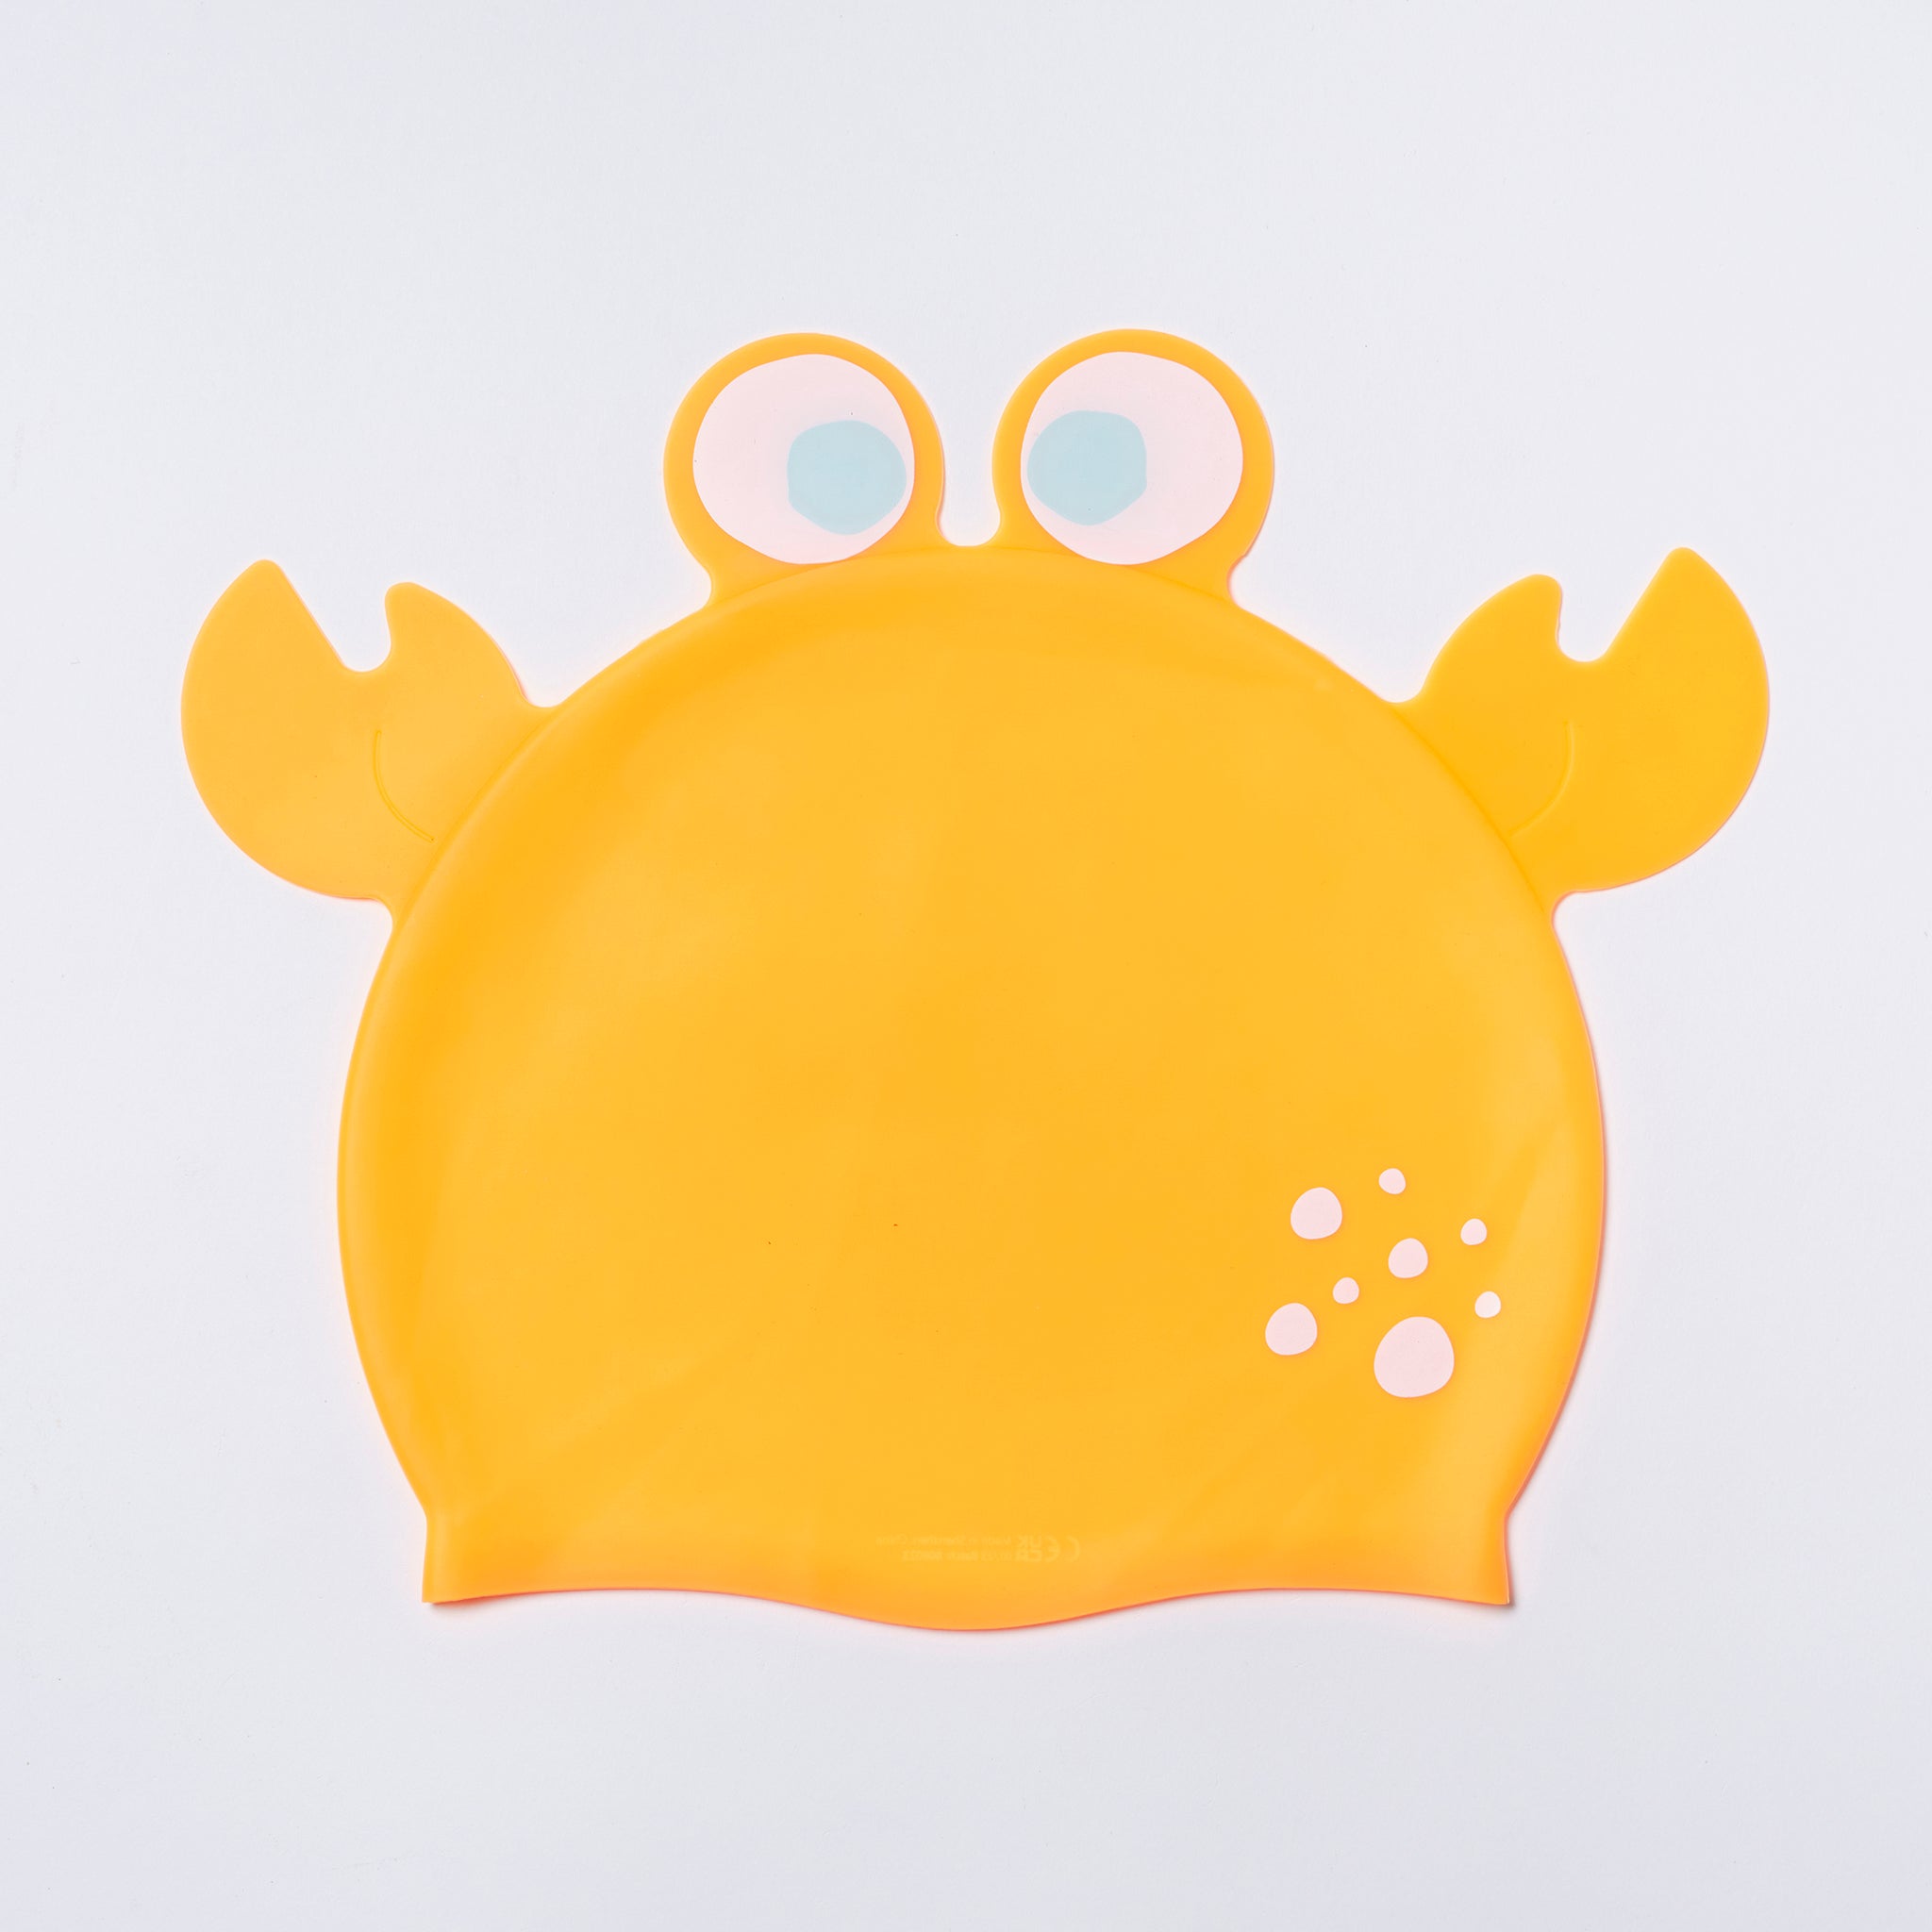 SUNNYLiFE |Shaped Swimming Cap | Sonny the Sea Creature Neon Orange